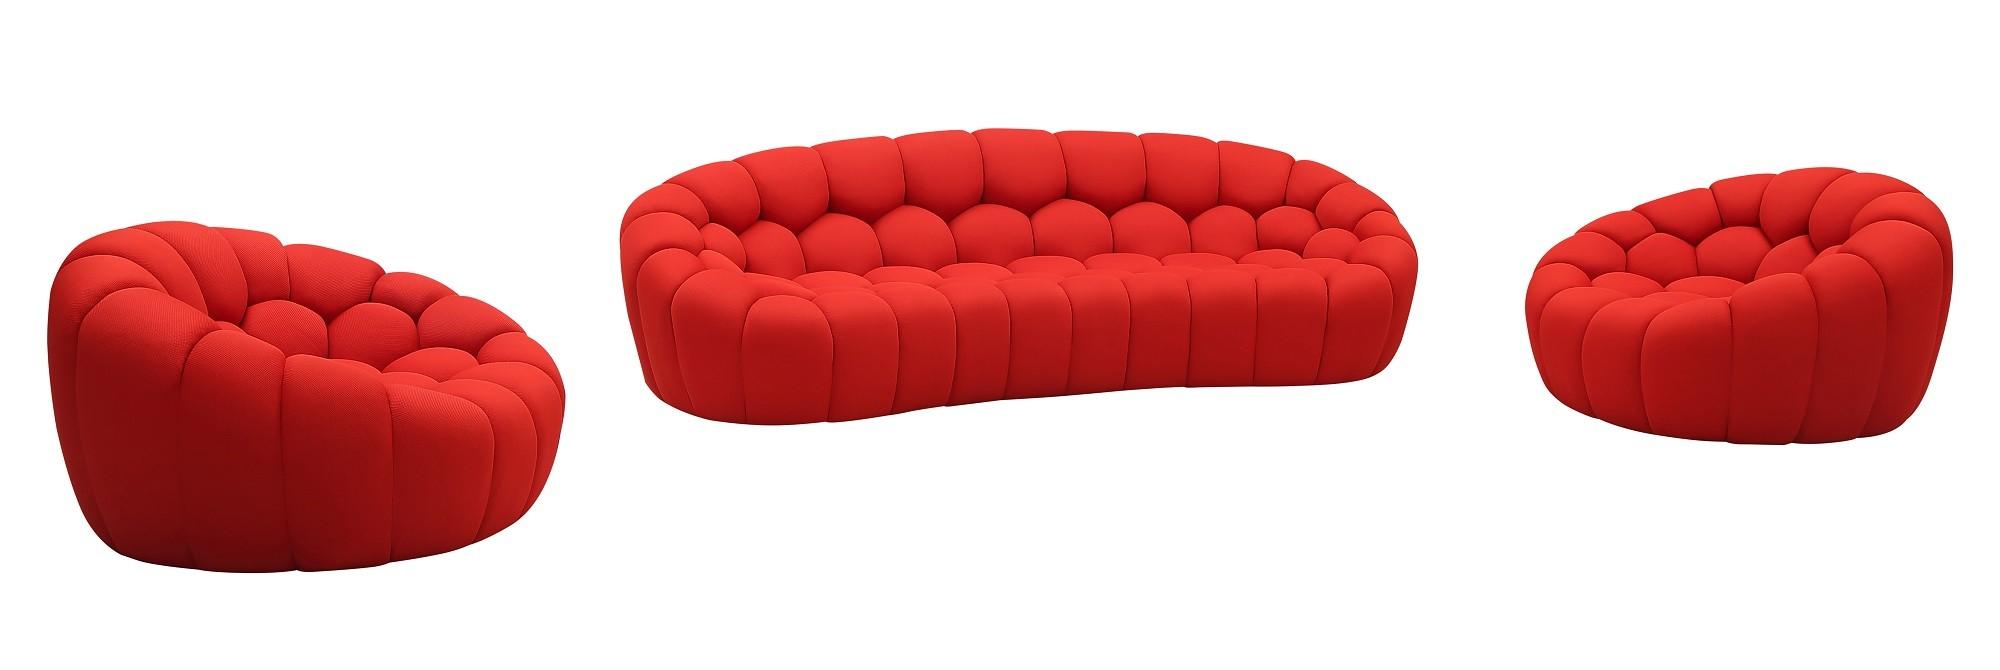 Contemporary Sofa Set Fantasy SKU 18442-R-3PC in Red Fabric